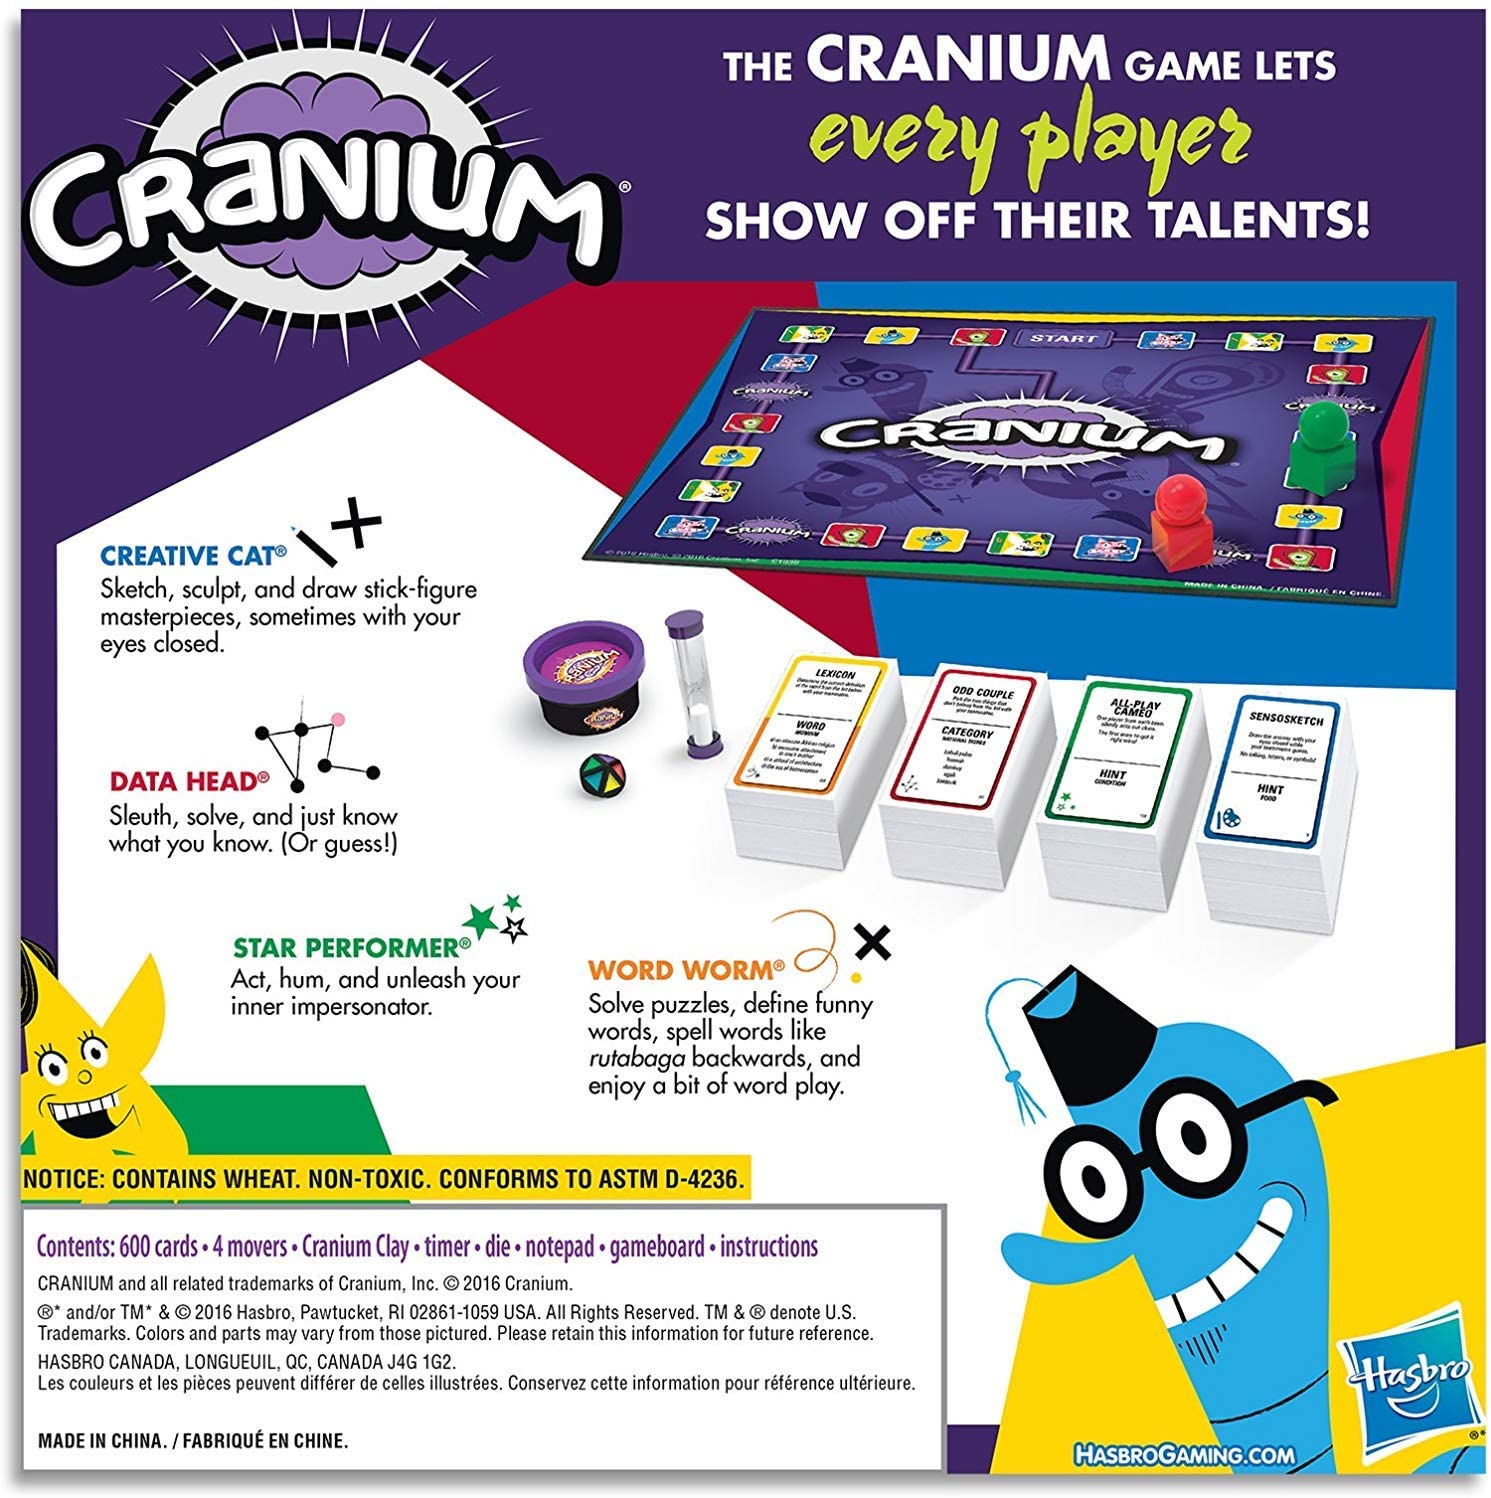 Find out about Cranium